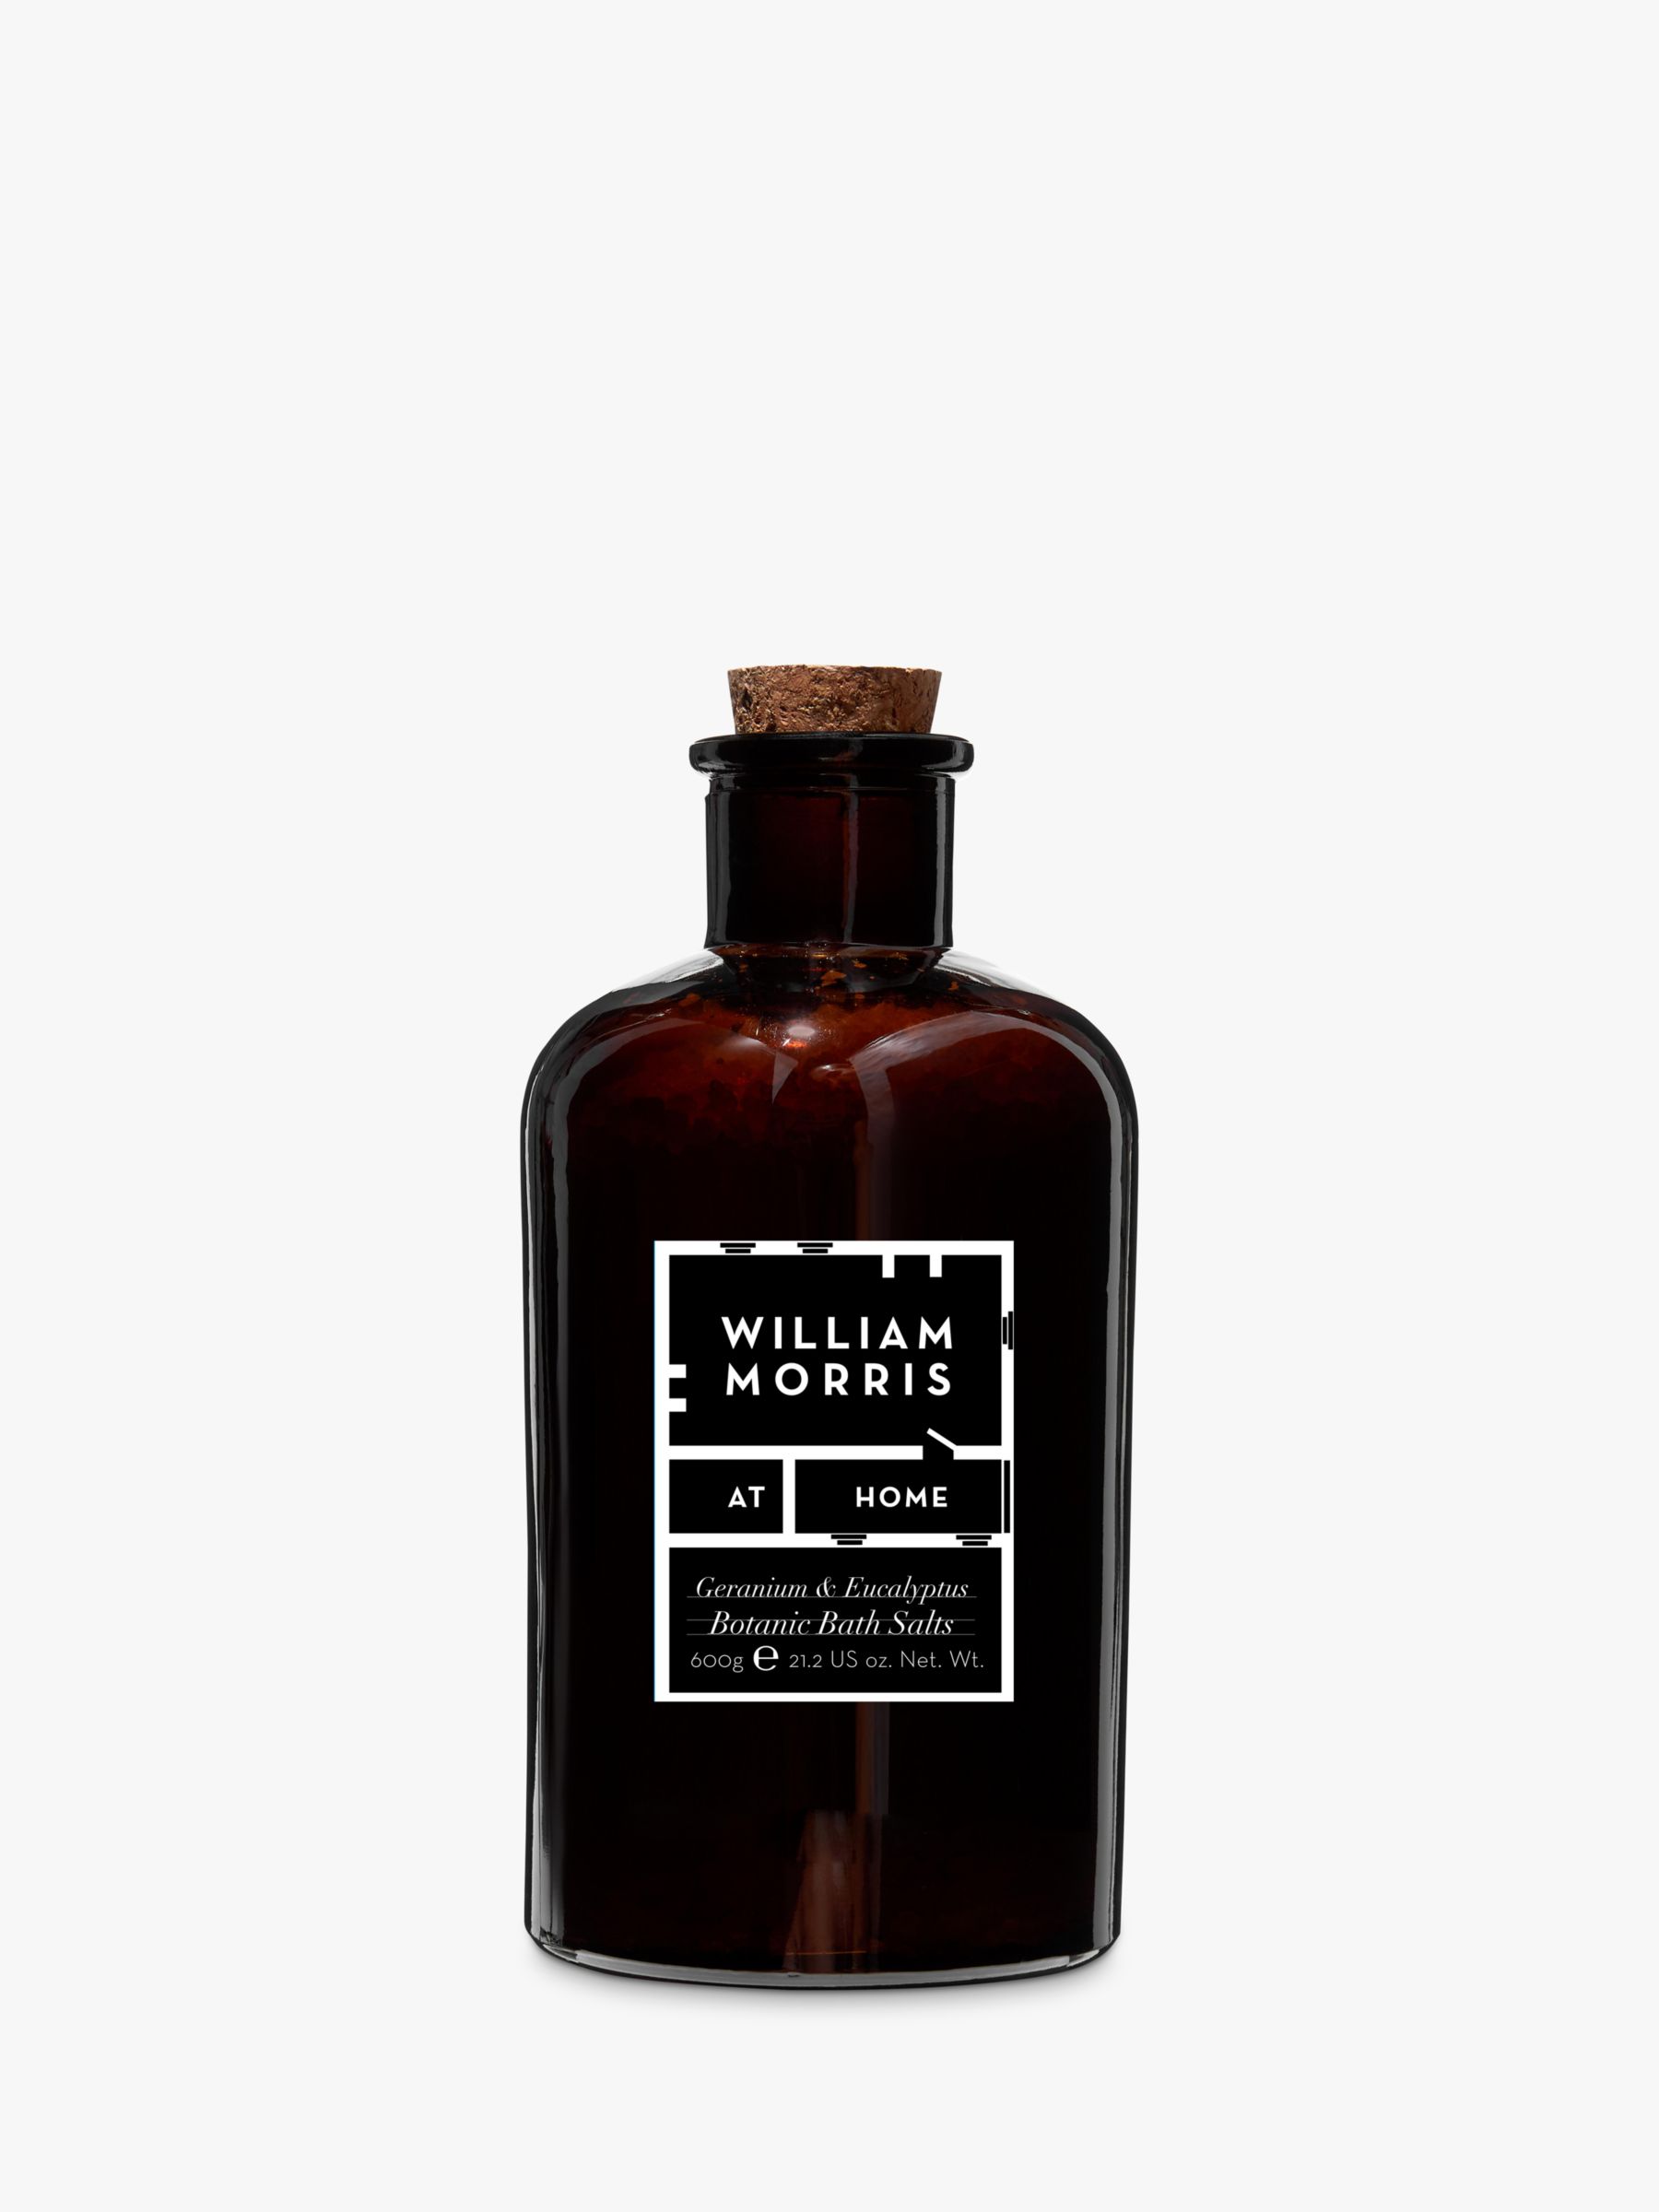 William Morris At Home Geranium & Eucalyptus Botanic Bath Salts, 600g 1